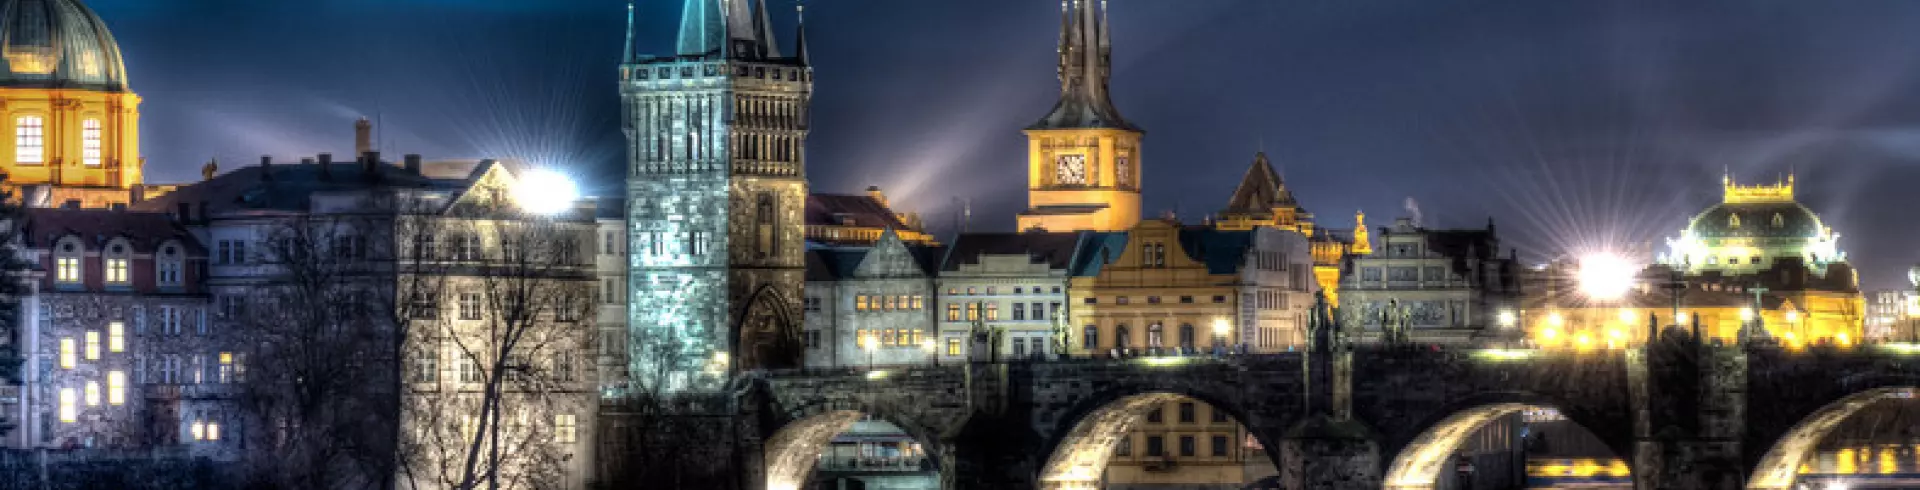 Praga i Skalne Miasto